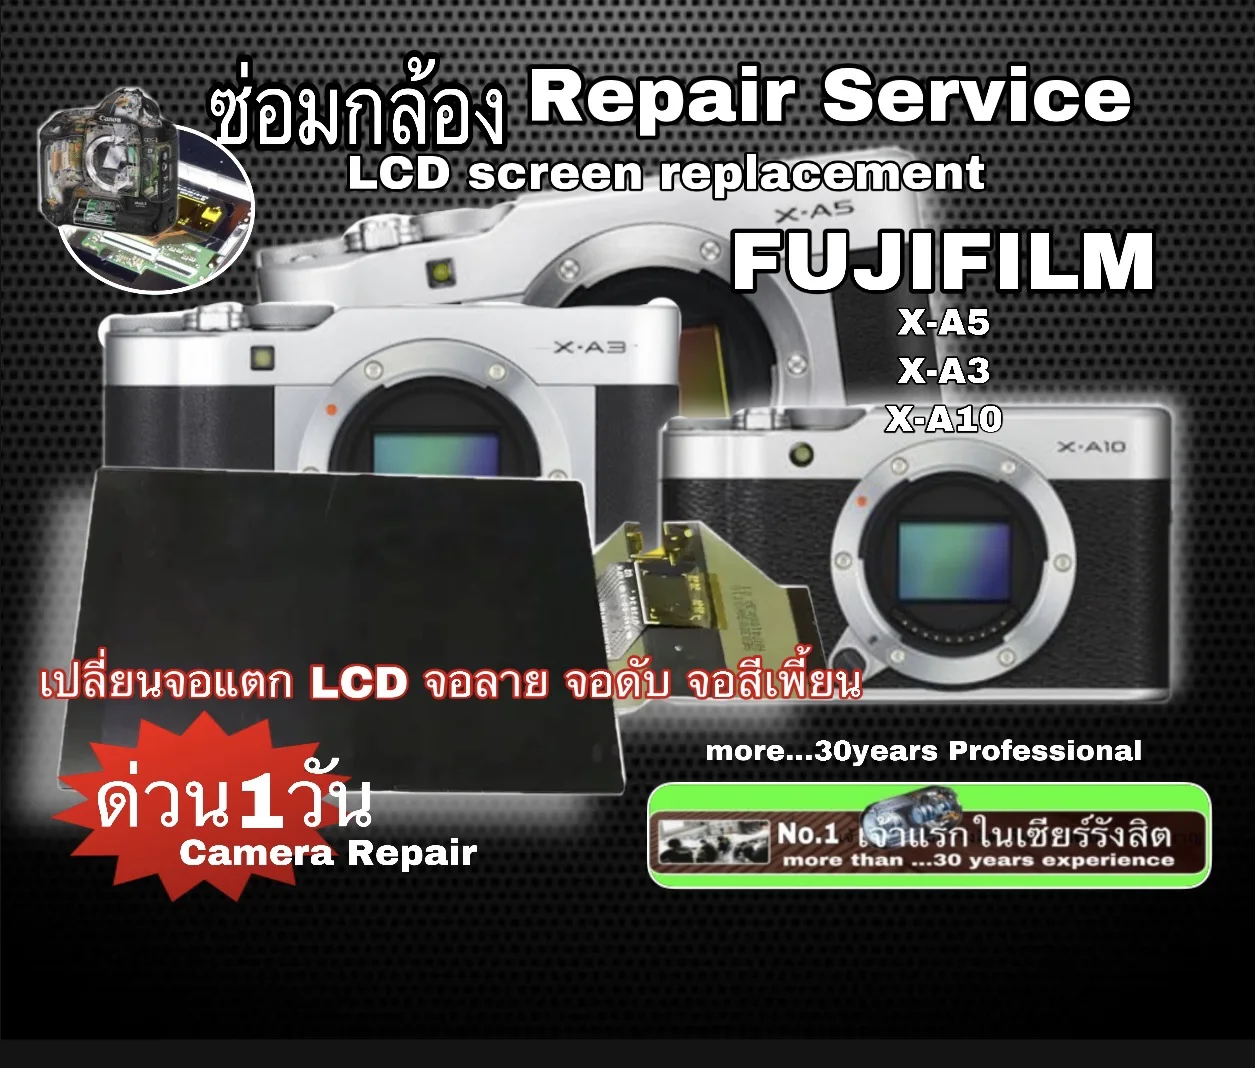 FUJIFILM X-A5 LCD screen replacement #ซ่อมกล้อง ช่างมืออาชีพ30ปี #เปลี่ยนจอ Fujifilm X-A3 ,X-A5, X-A10 ,X-A20 จอแตก จอลาย จอสีเพี้ยน ซ่อมด่วน รอรับได้ แถมติดฟิล์มกันรอยfree